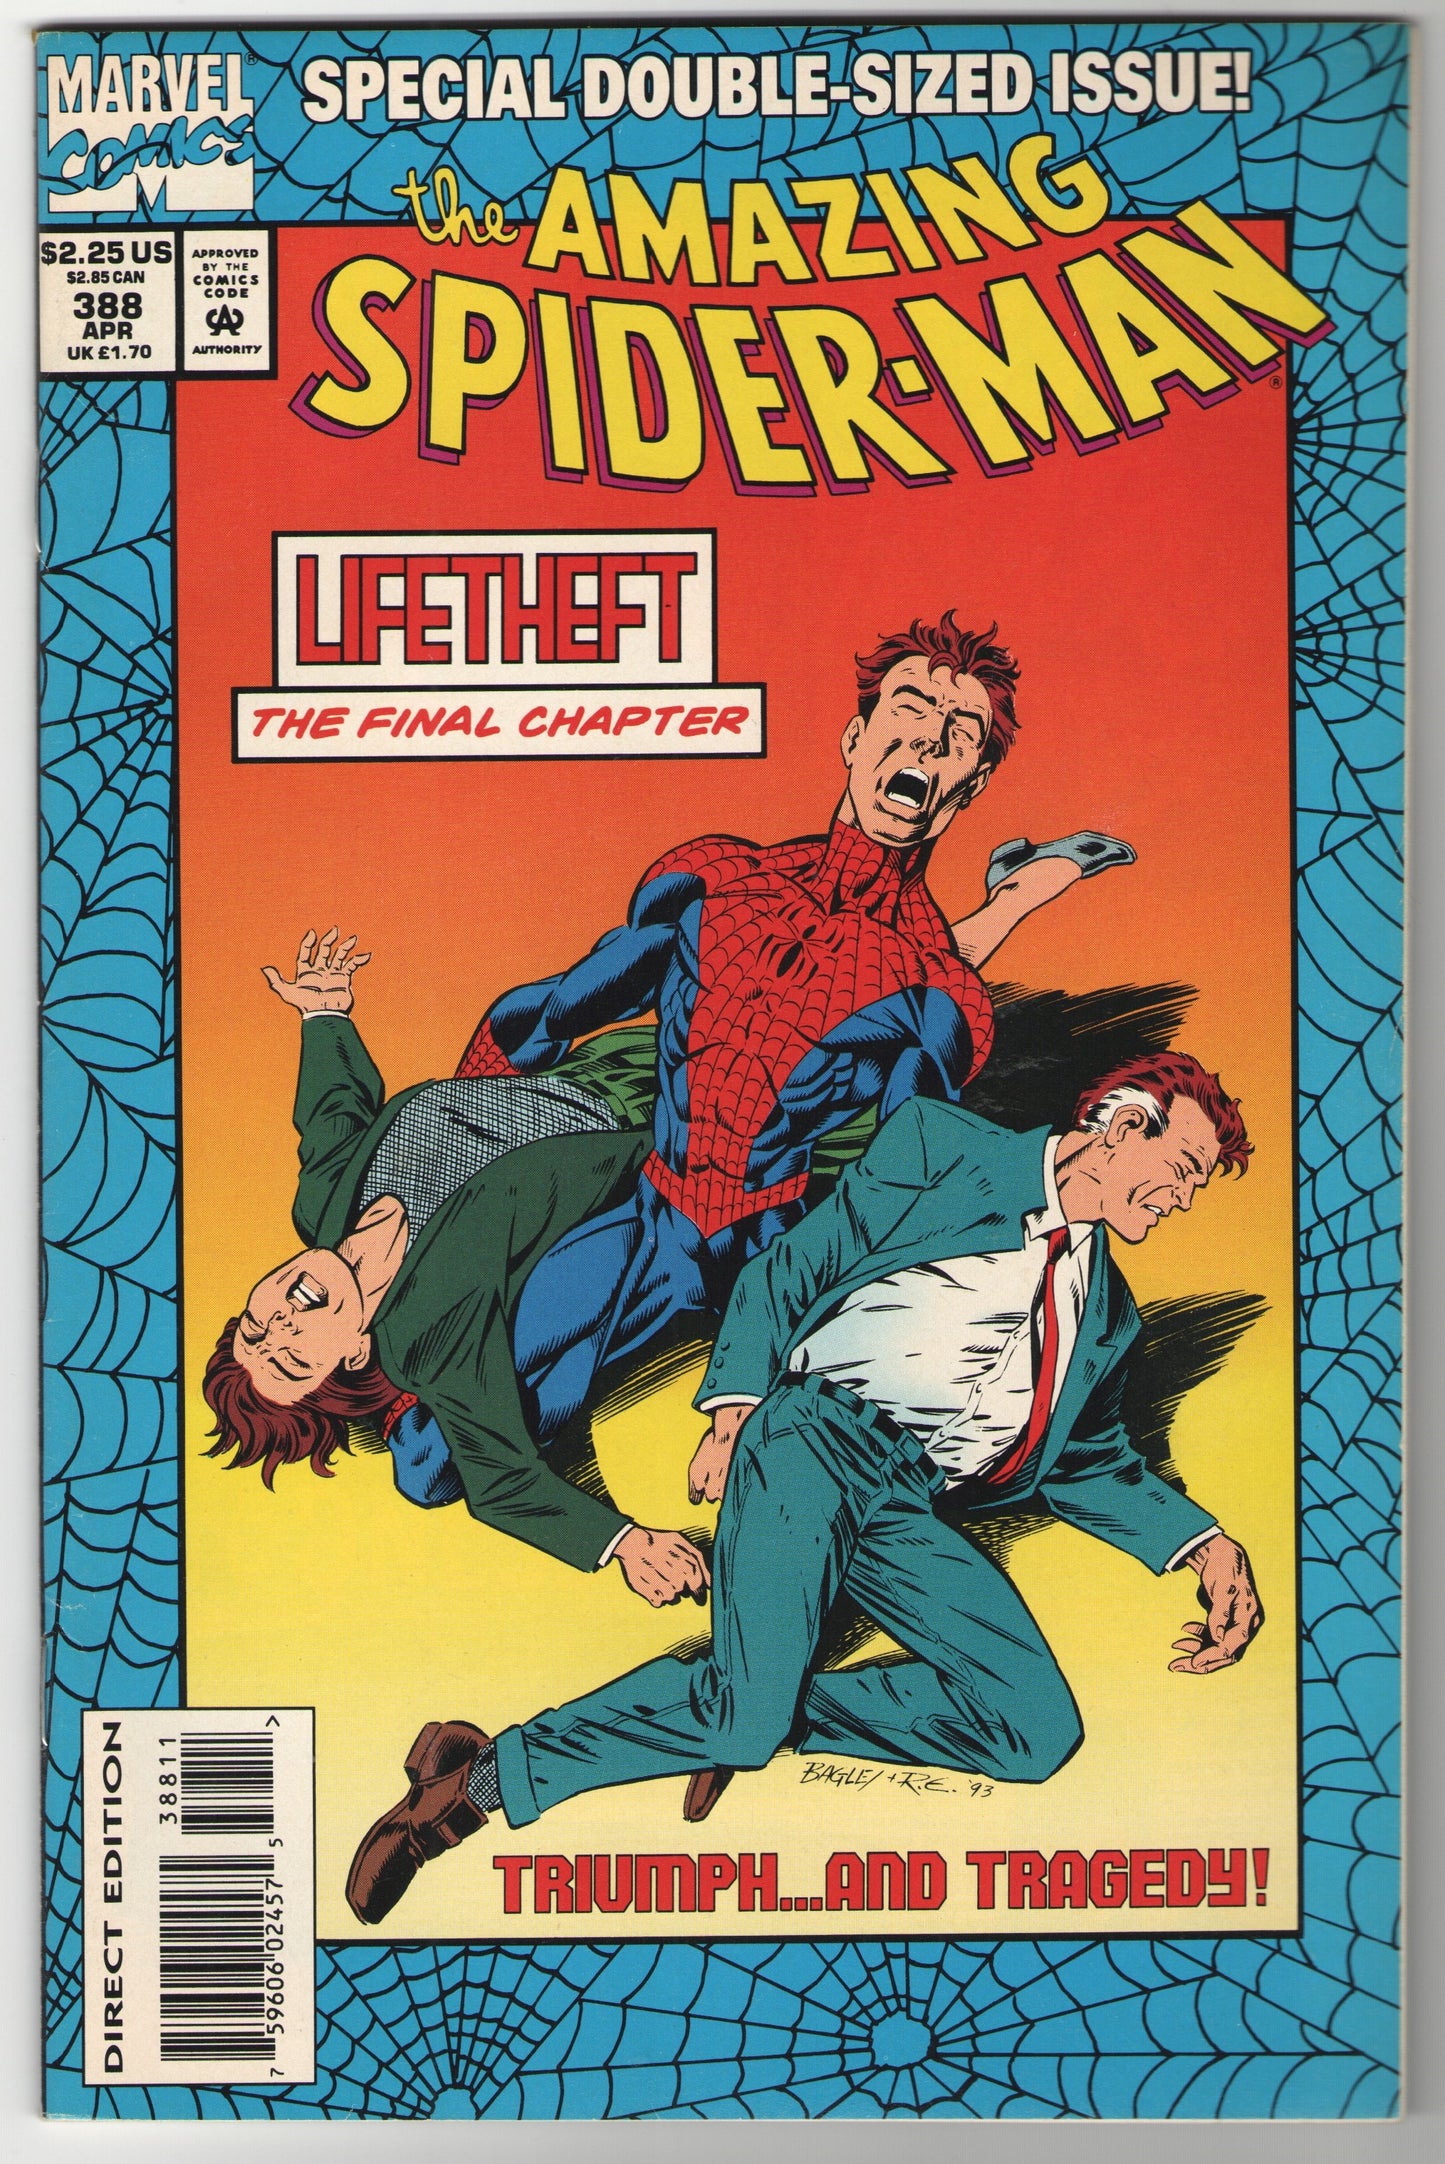 Amazing Spider-Man "Lifetheft" Complete Story Arc #386-388 (1994)